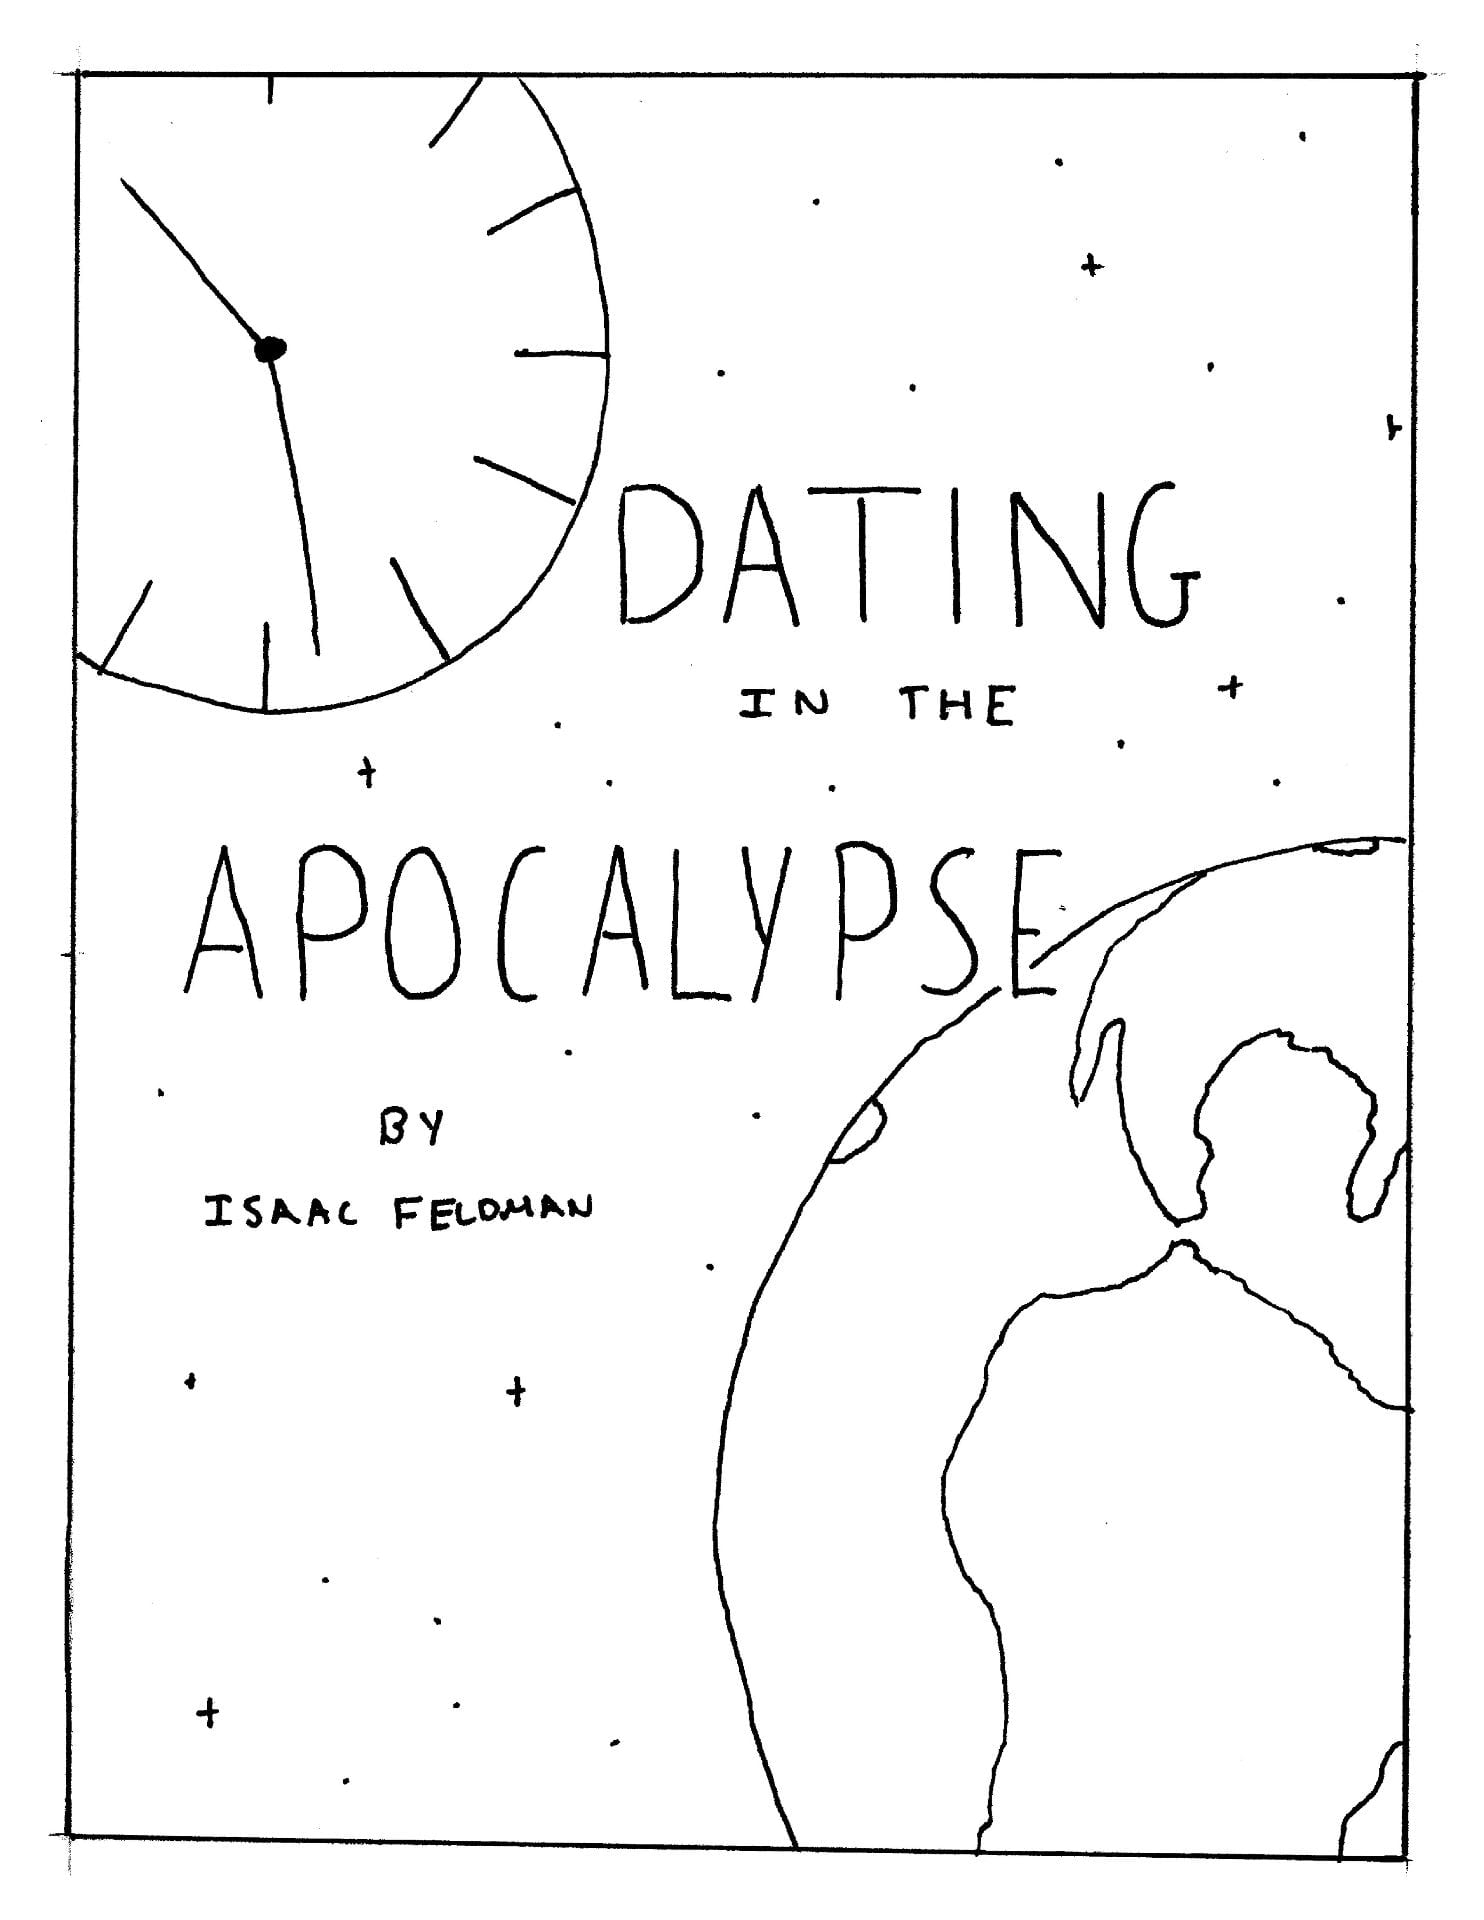 I. Feldman - Comic Page 1 - Dating in the Apocalypse